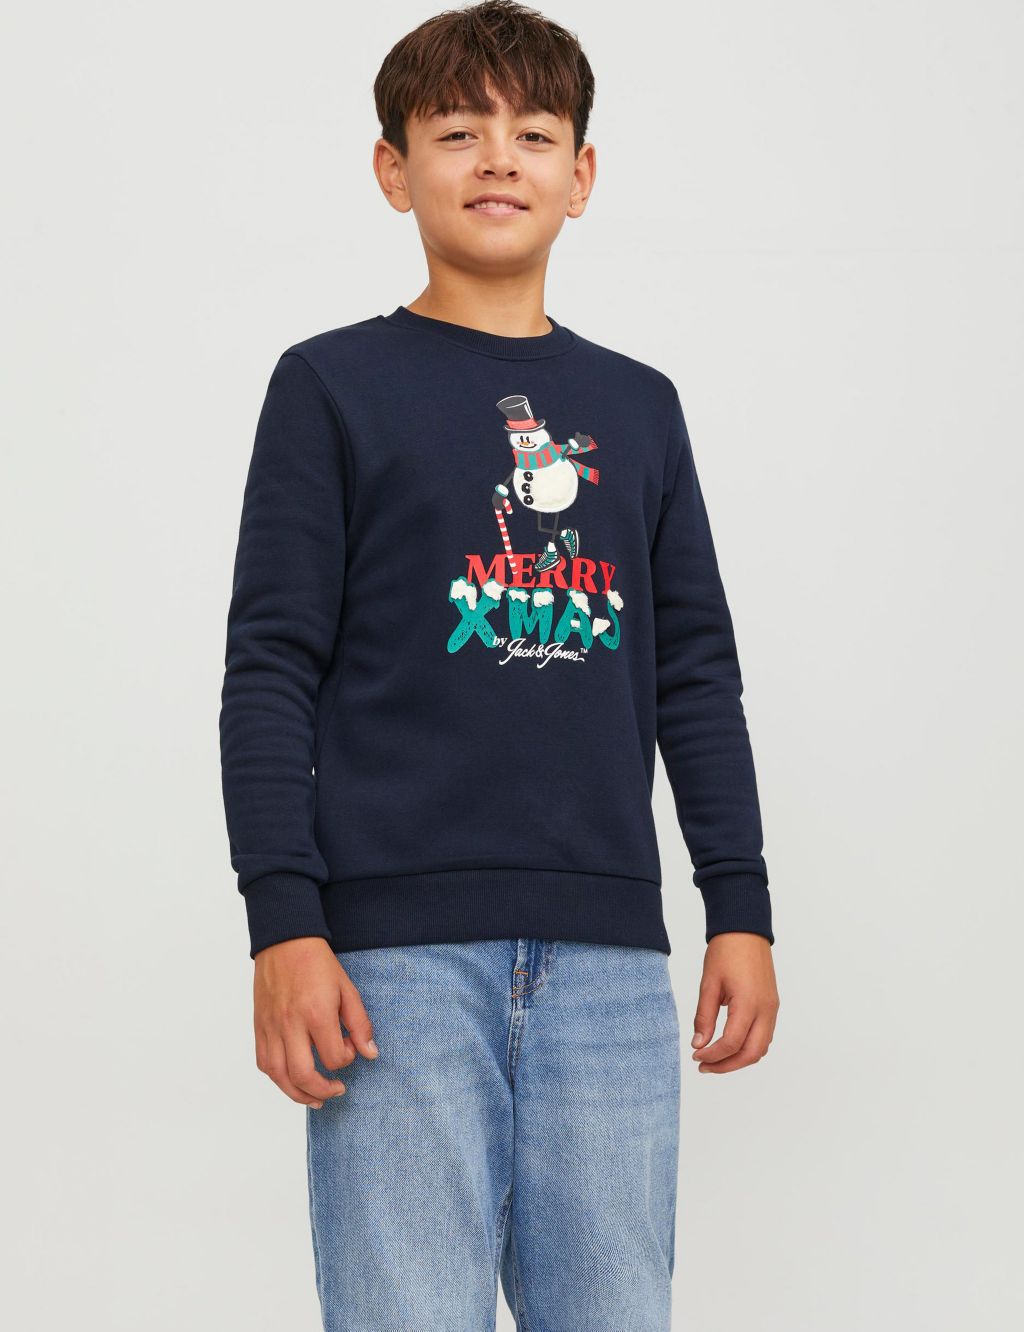 Cotton Rich Christmas Slogan Sweatshirt (8-16 Yrs) image 1